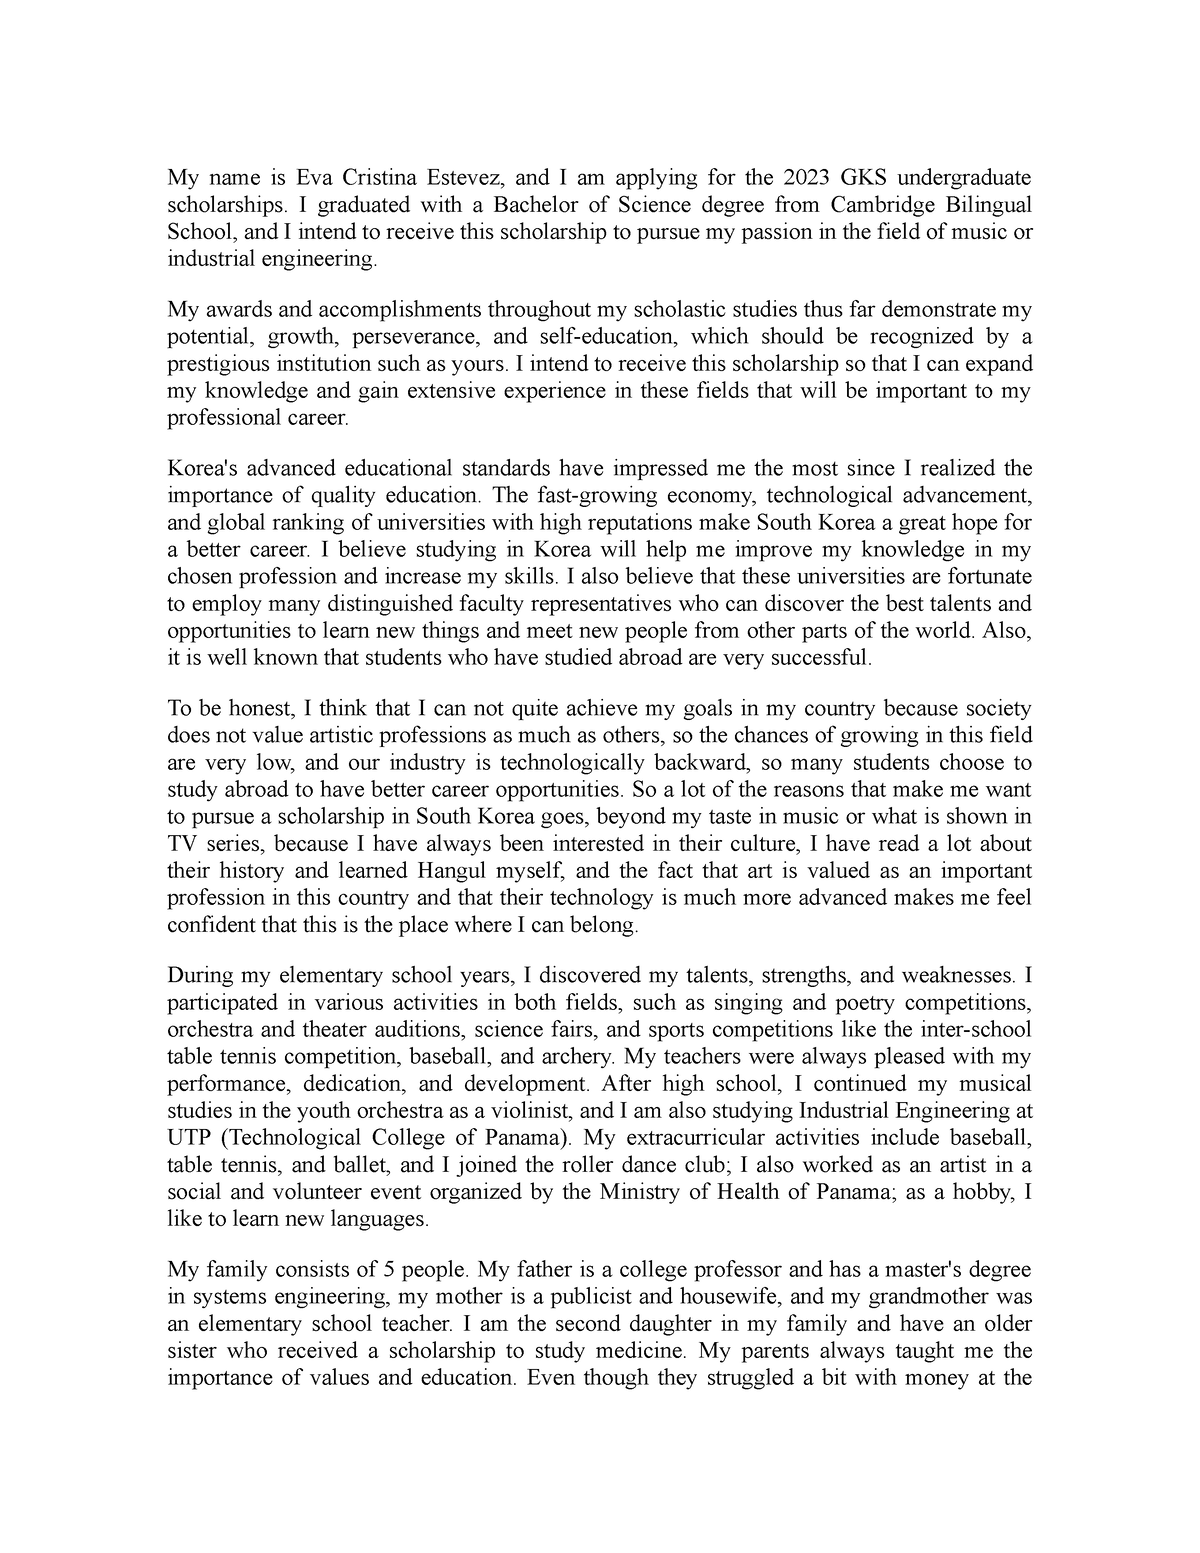 gks scholarship personal statement